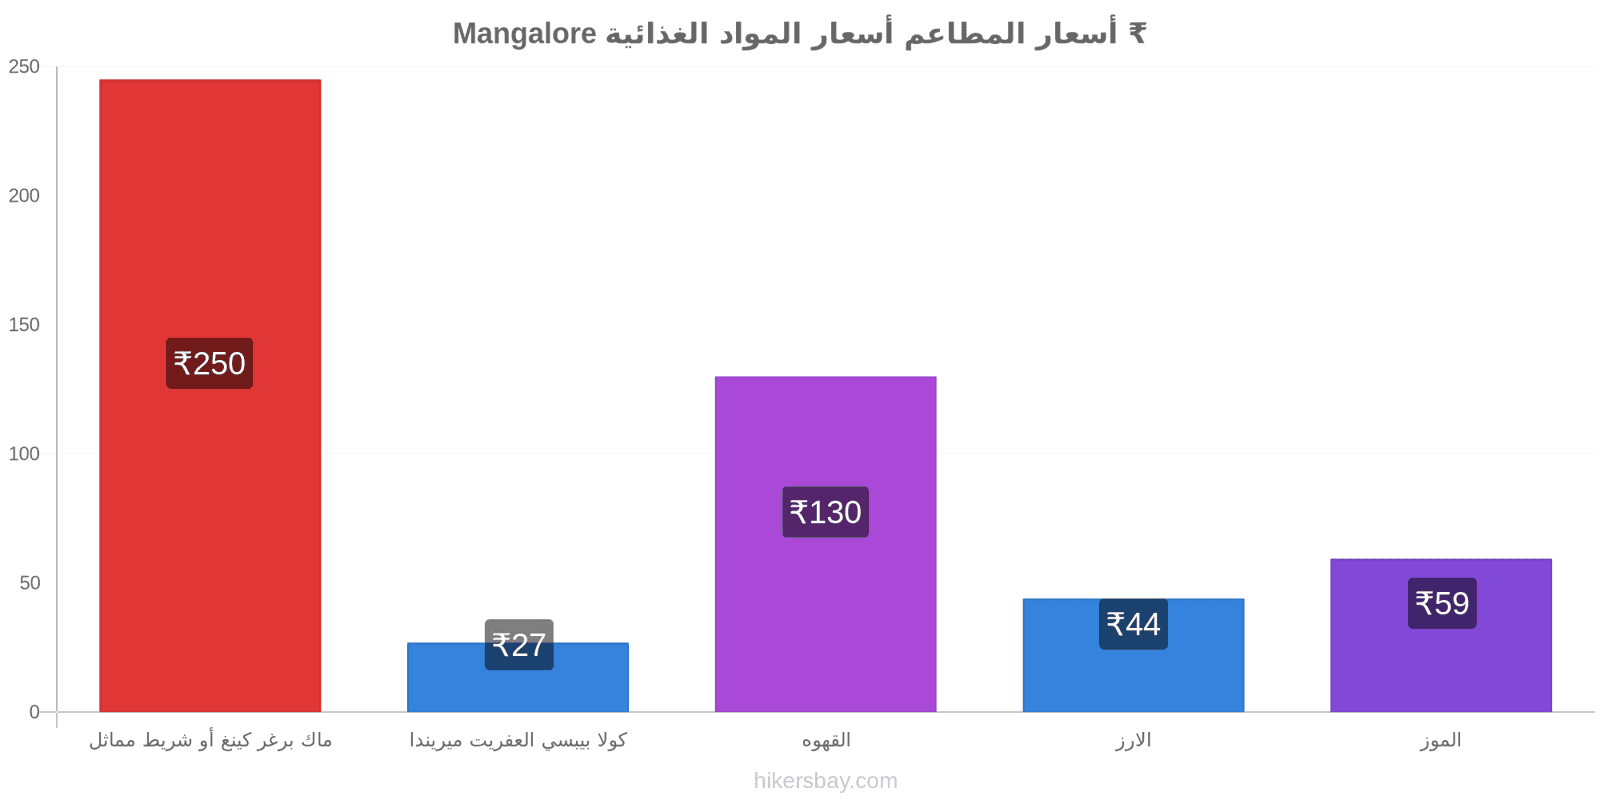 Mangalore تغييرات الأسعار hikersbay.com